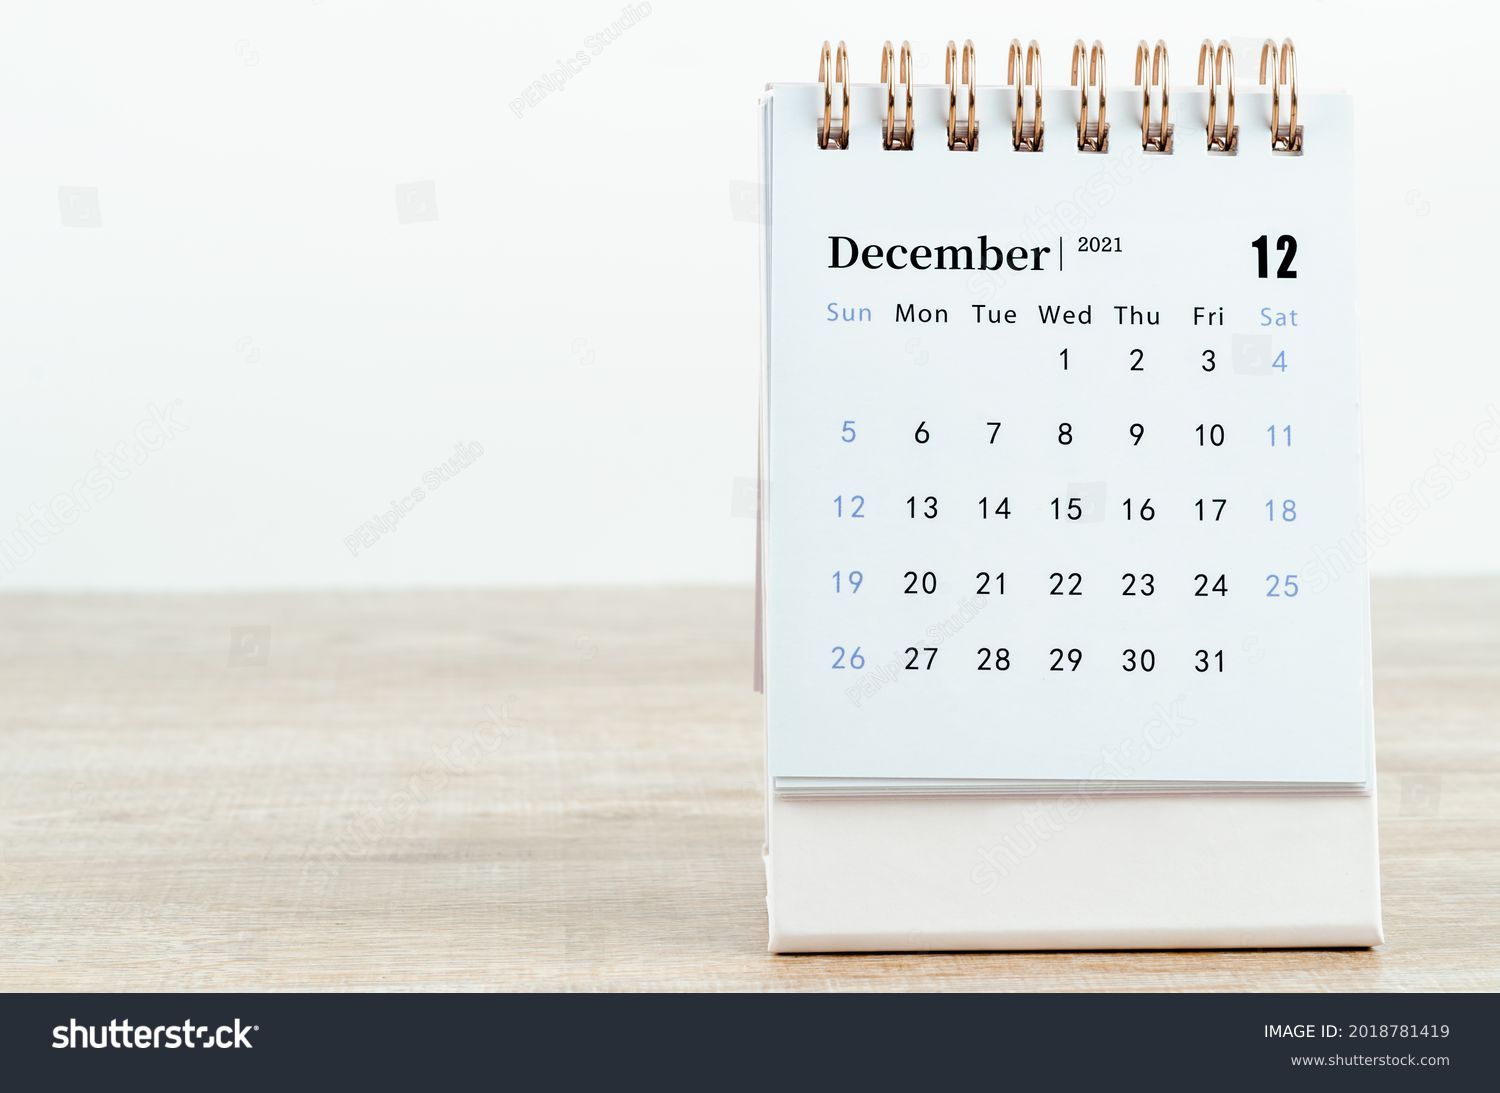 December Calendar 2021 on wooden table background. #2018781419